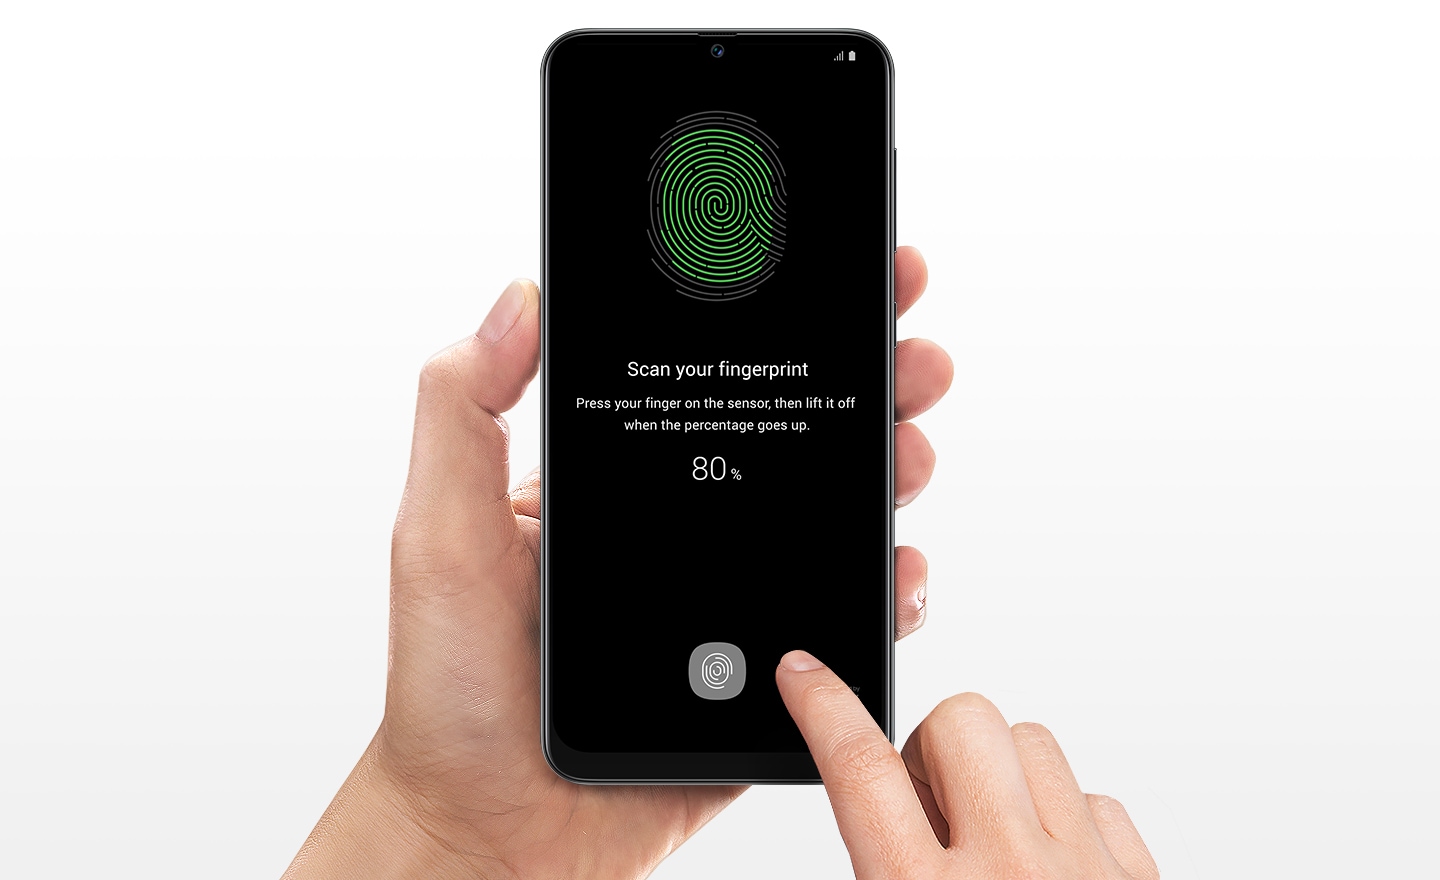 Your fingerprint is the key